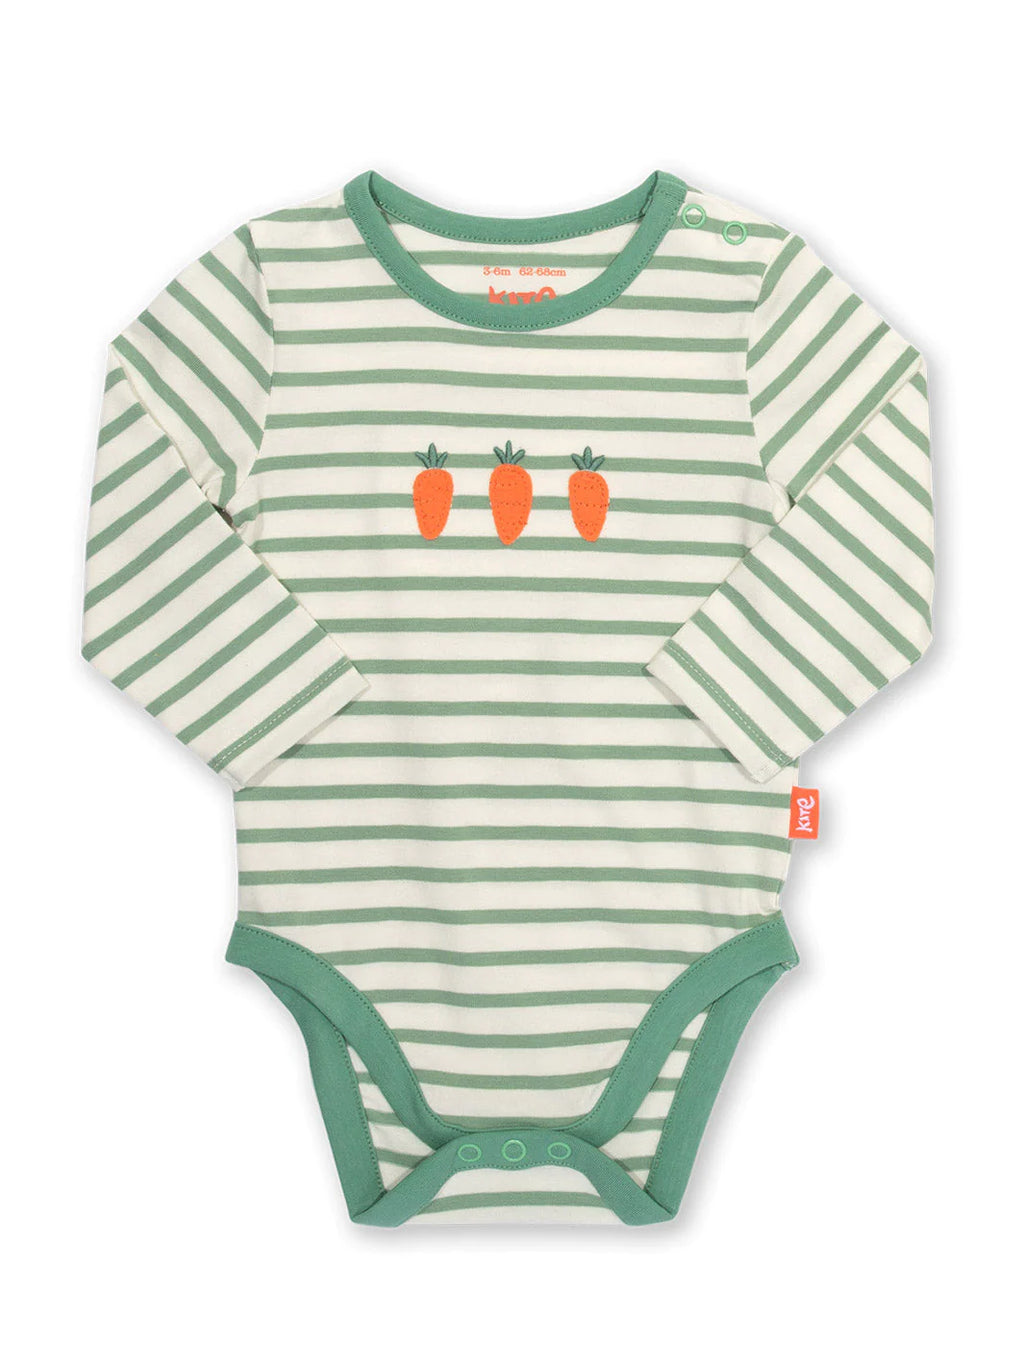 Kite Clothing Baby Bodysuit Sage Green Carroty Bodysuit | SALE